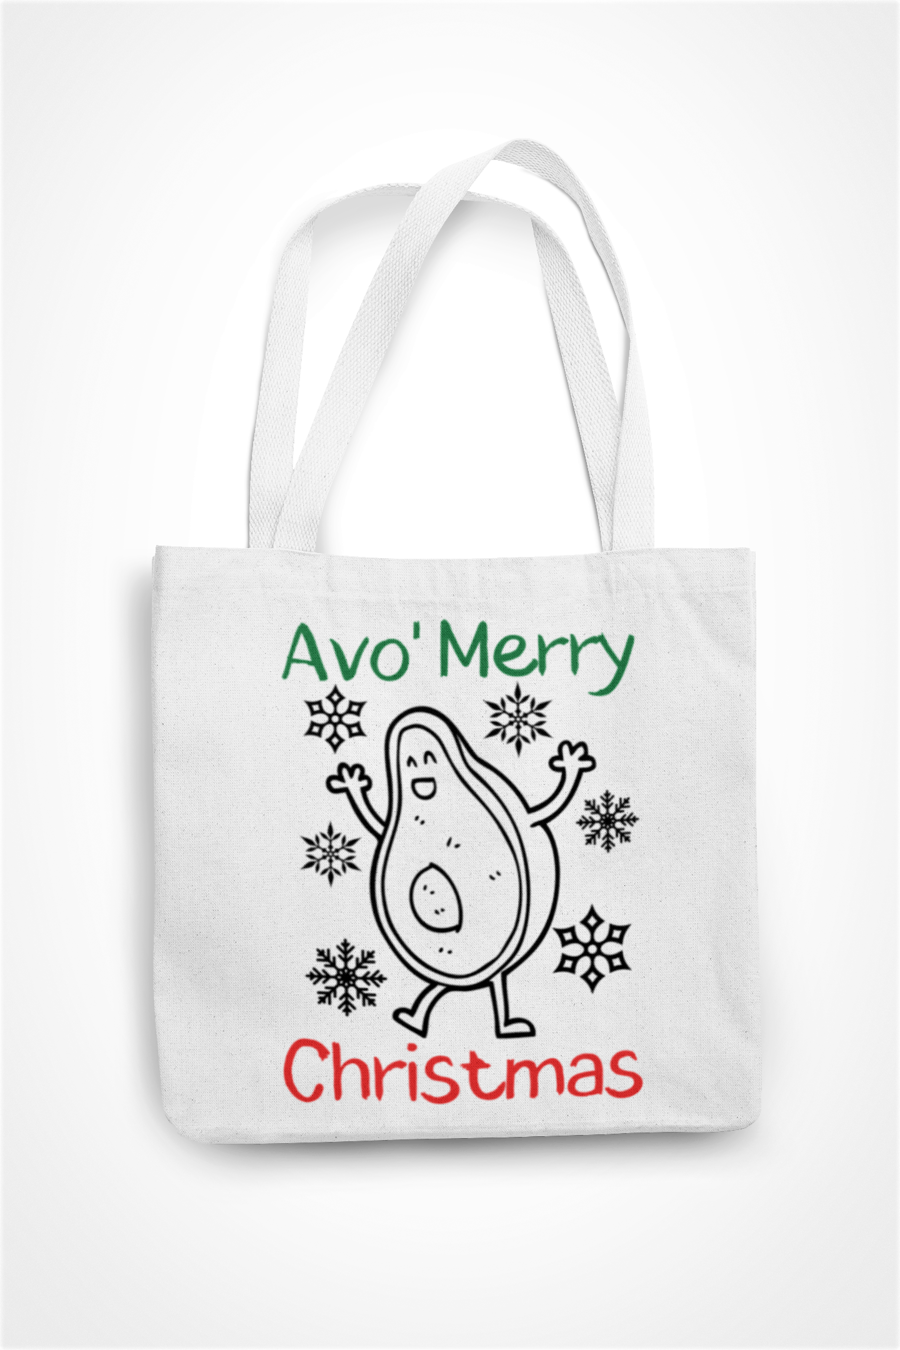 Avo Merry Christmas - Novelty Funny Christmas Tote Bag Avocardo themed